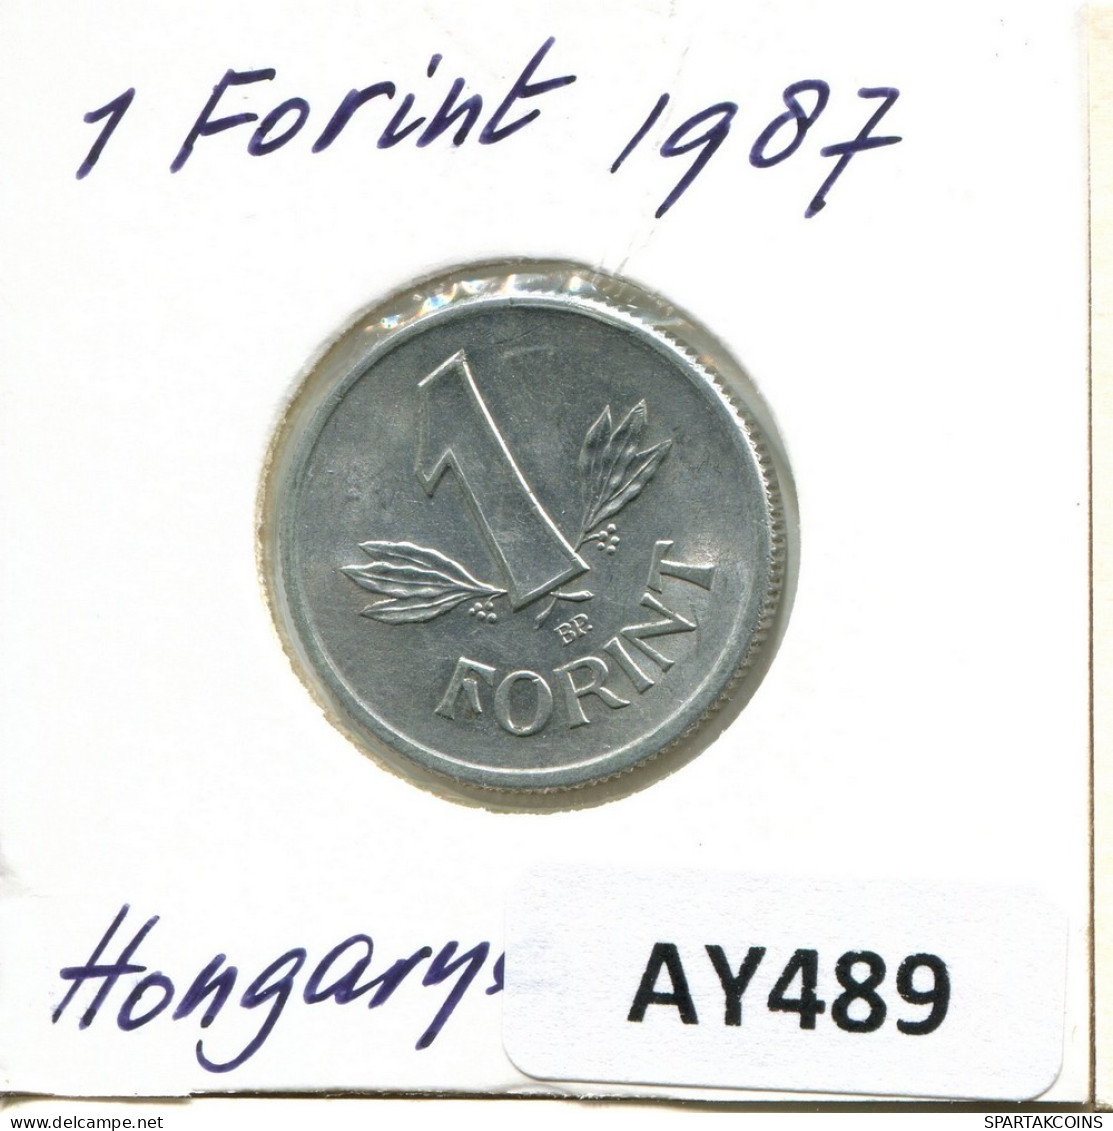 1 FORINT 1987 HONGRIE HUNGARY Pièce #AY489.F.A - Ungarn